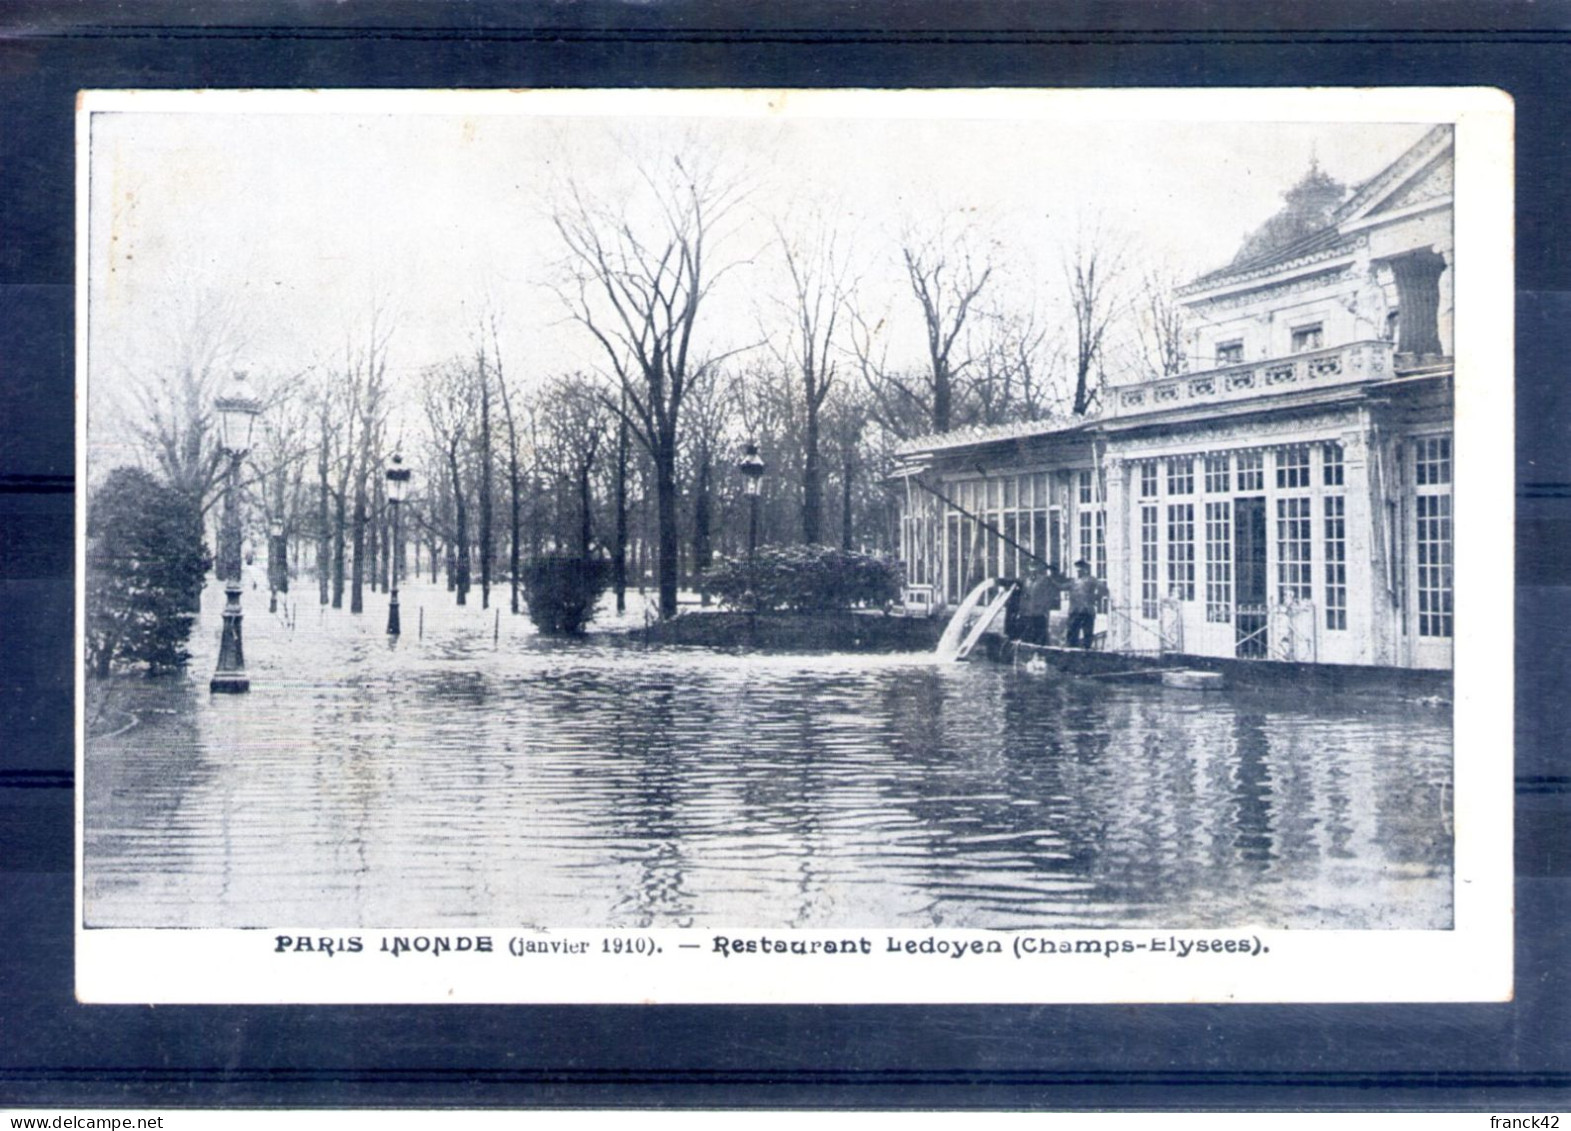 75. Paris Inondé. Restaurant Ledoyen (champs élysées) - Paris Flood, 1910